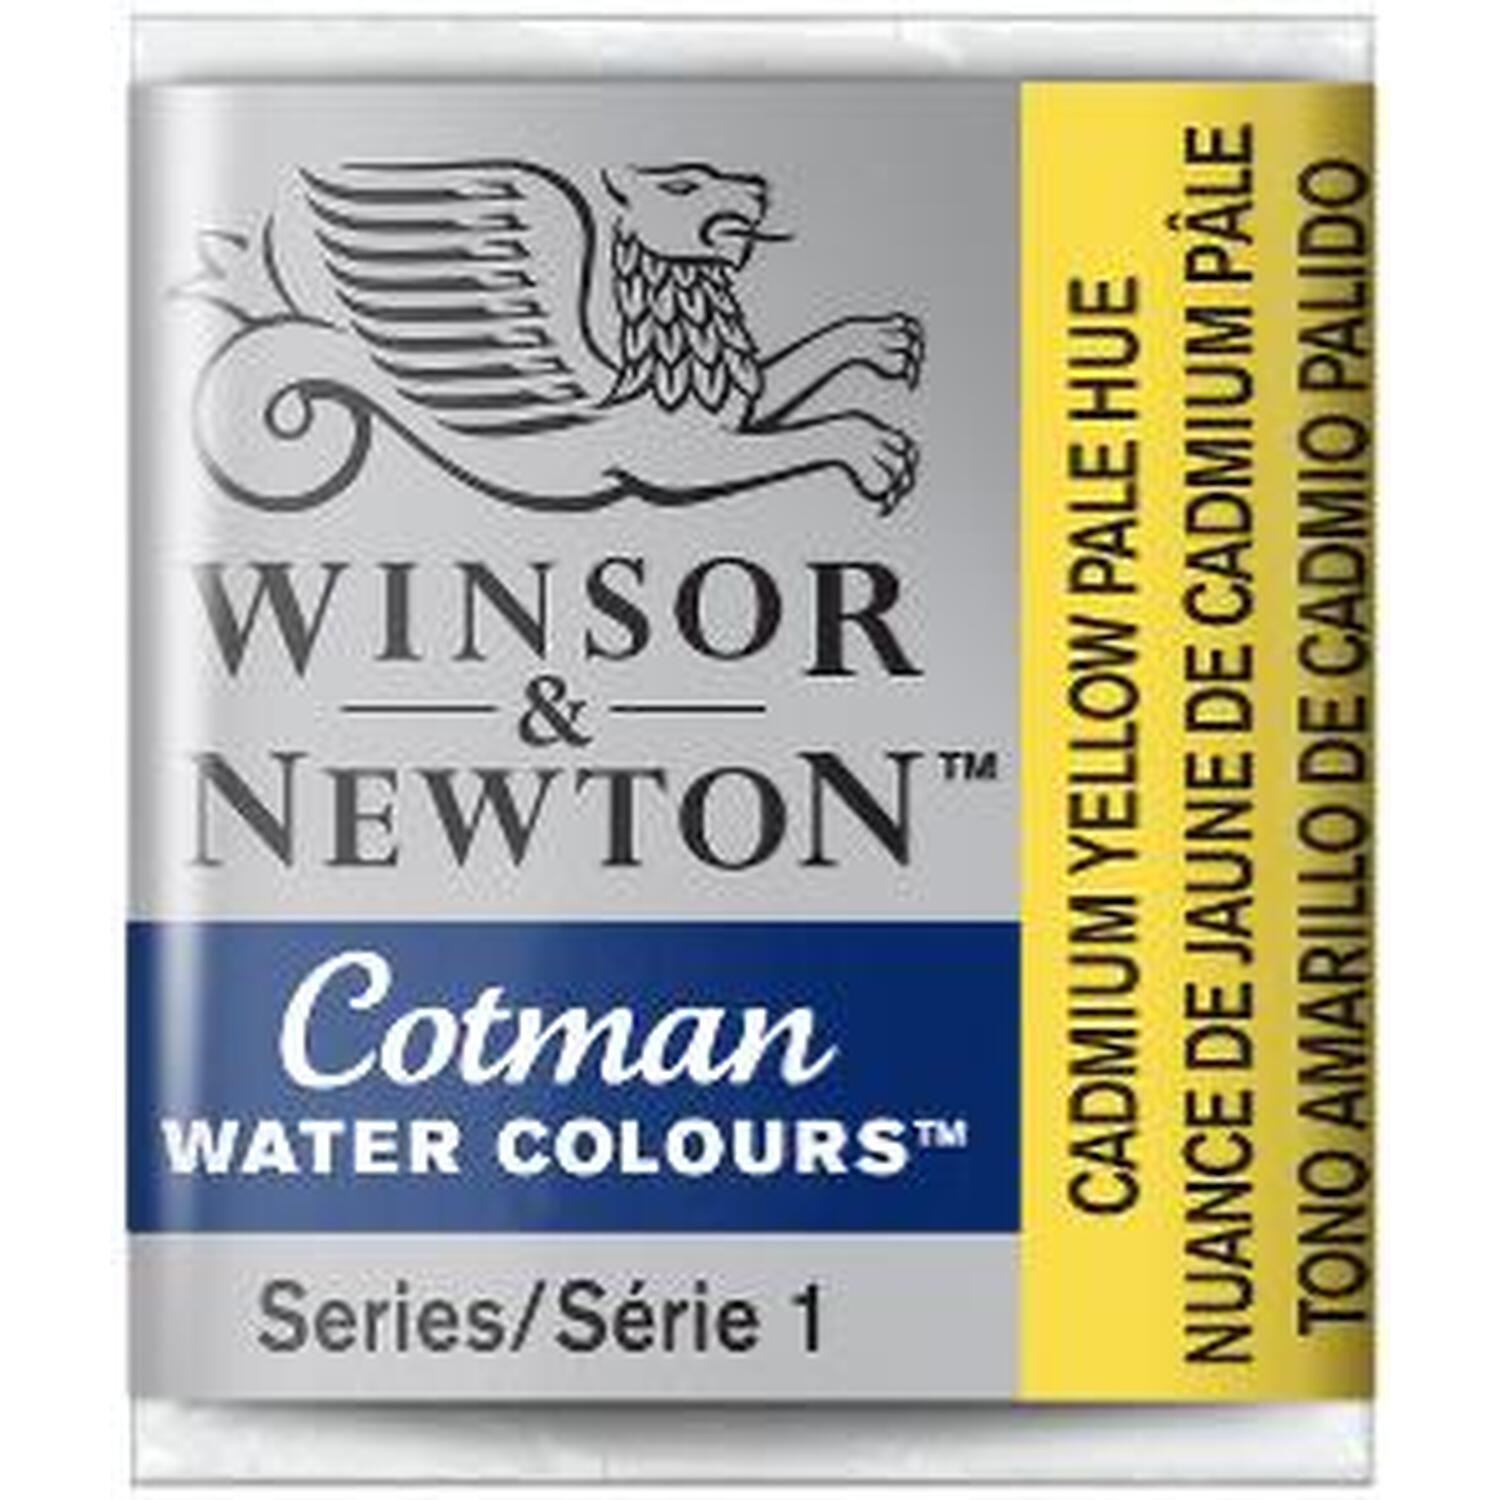 Winsor and Newton Cotman Watercolour Half Pan Paint - Cadmium Yellow Pale Hue Image